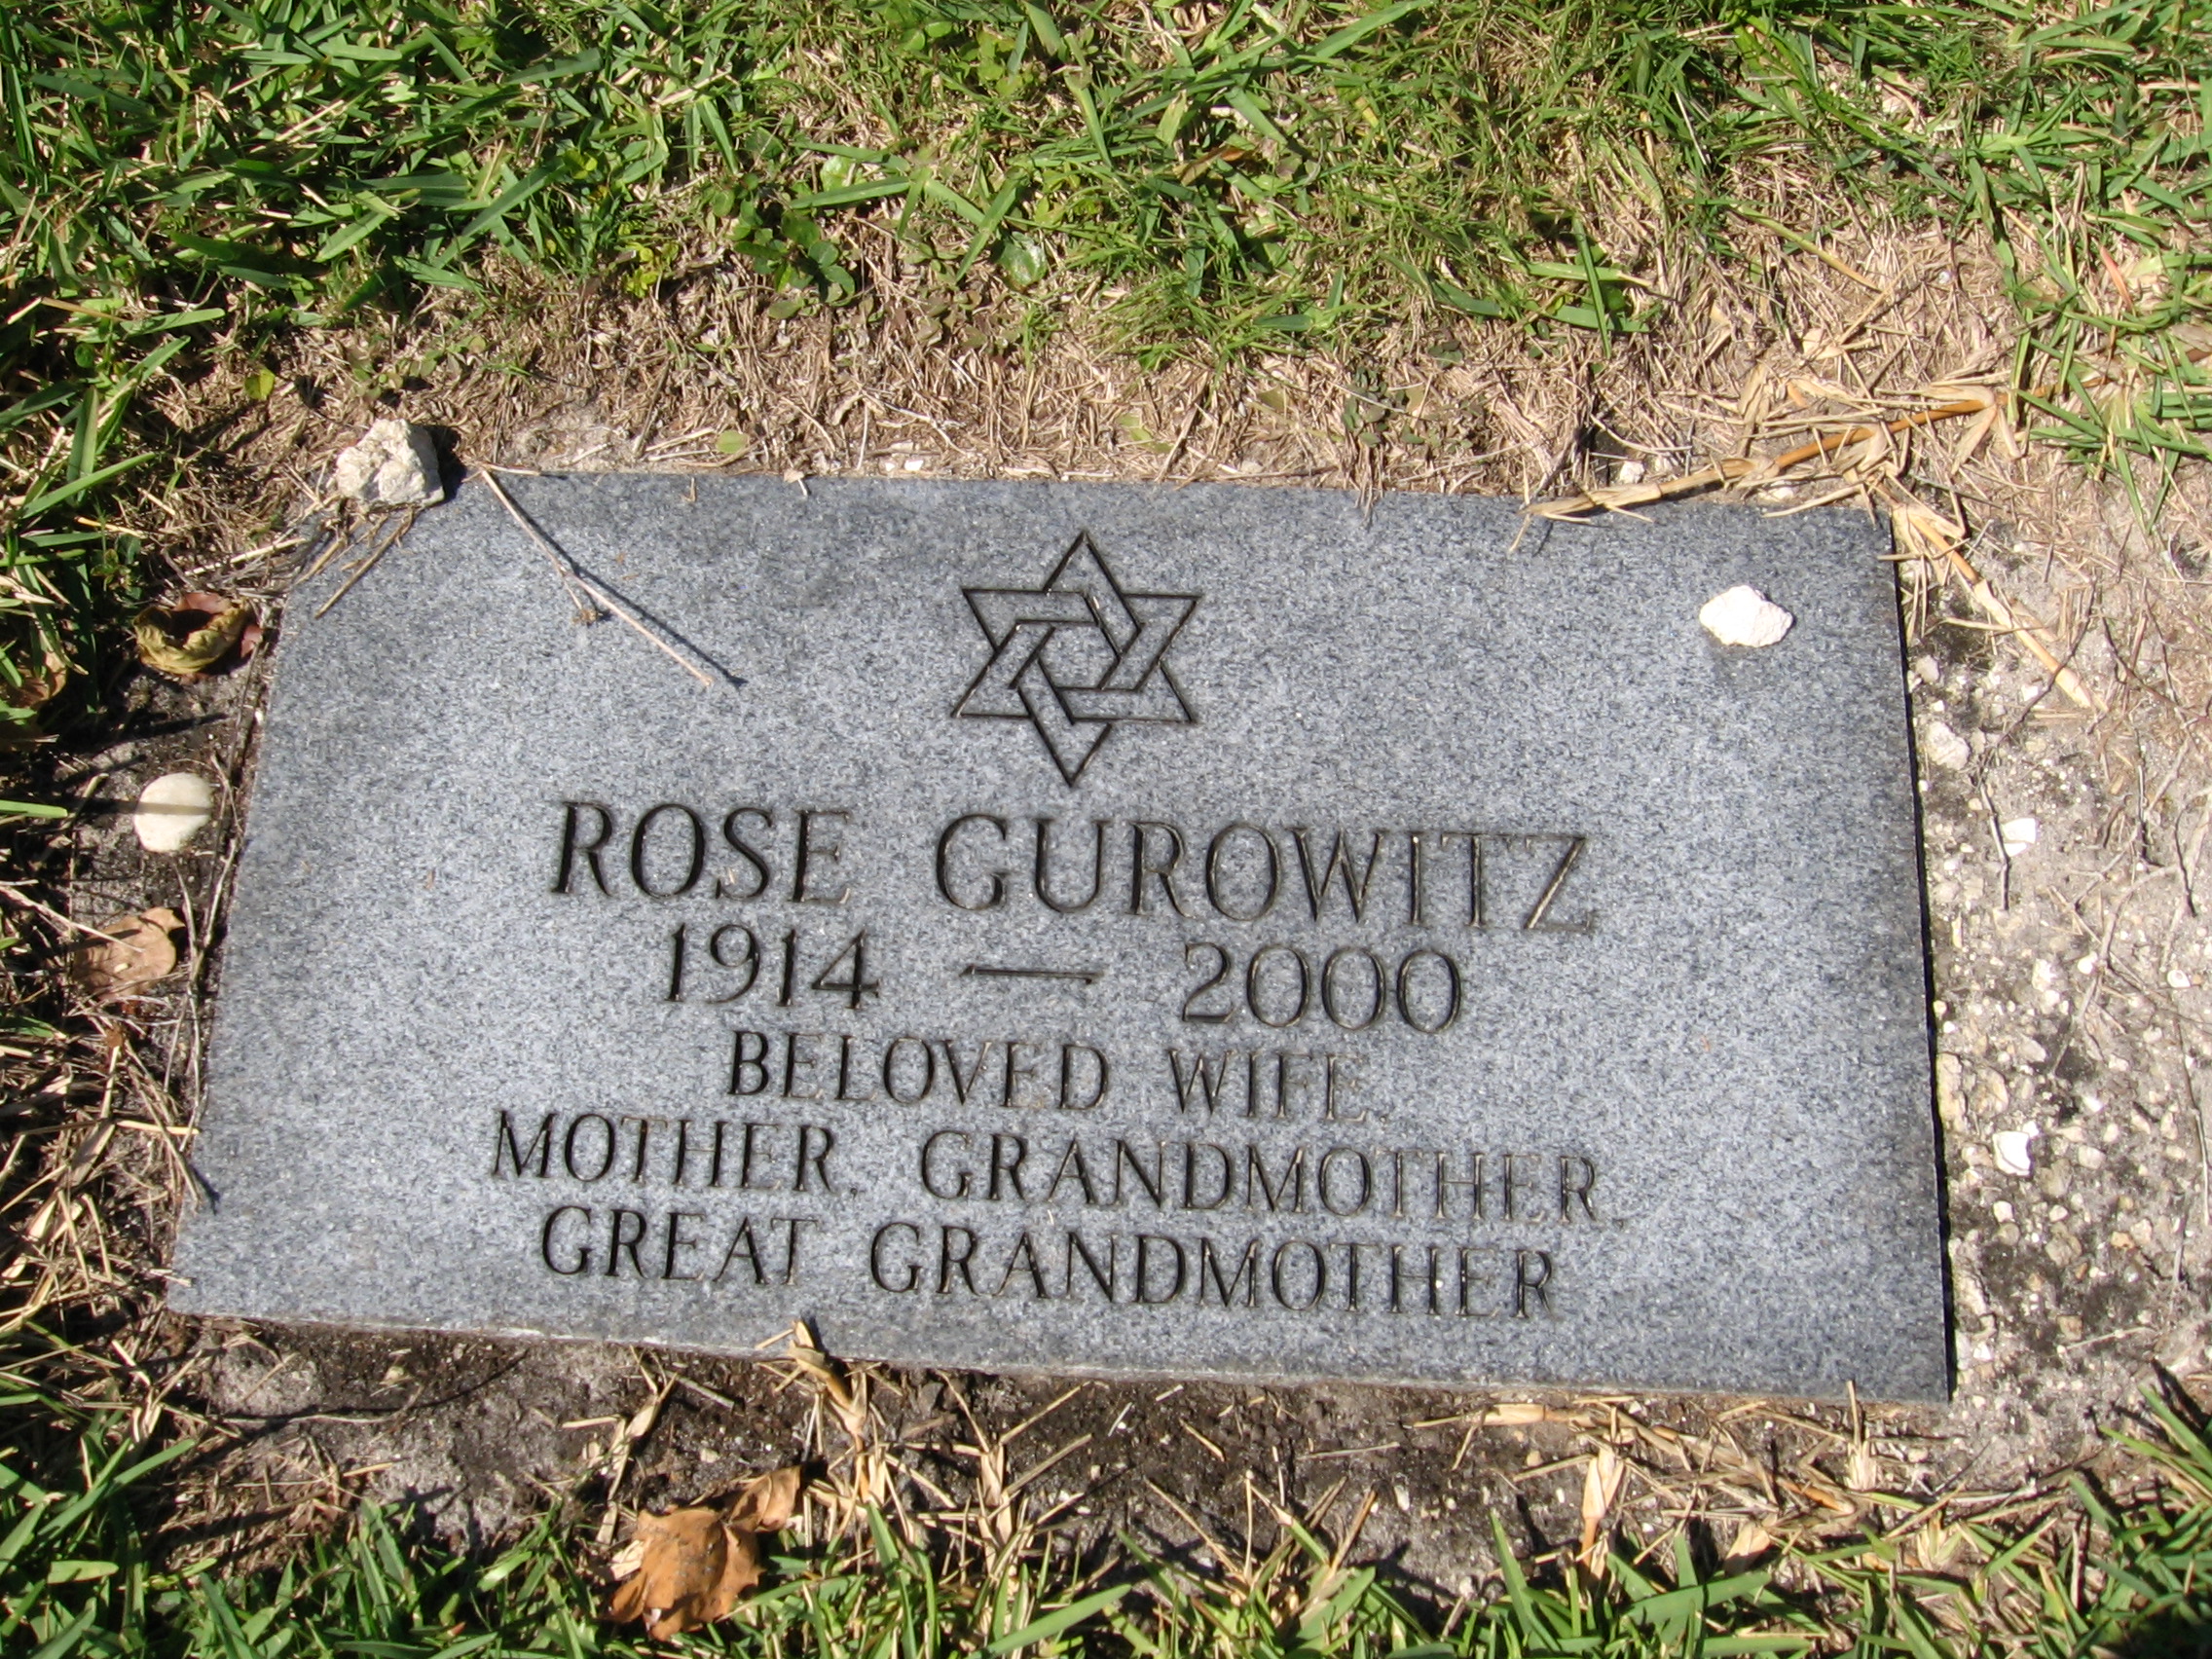 Rose Gurowitz